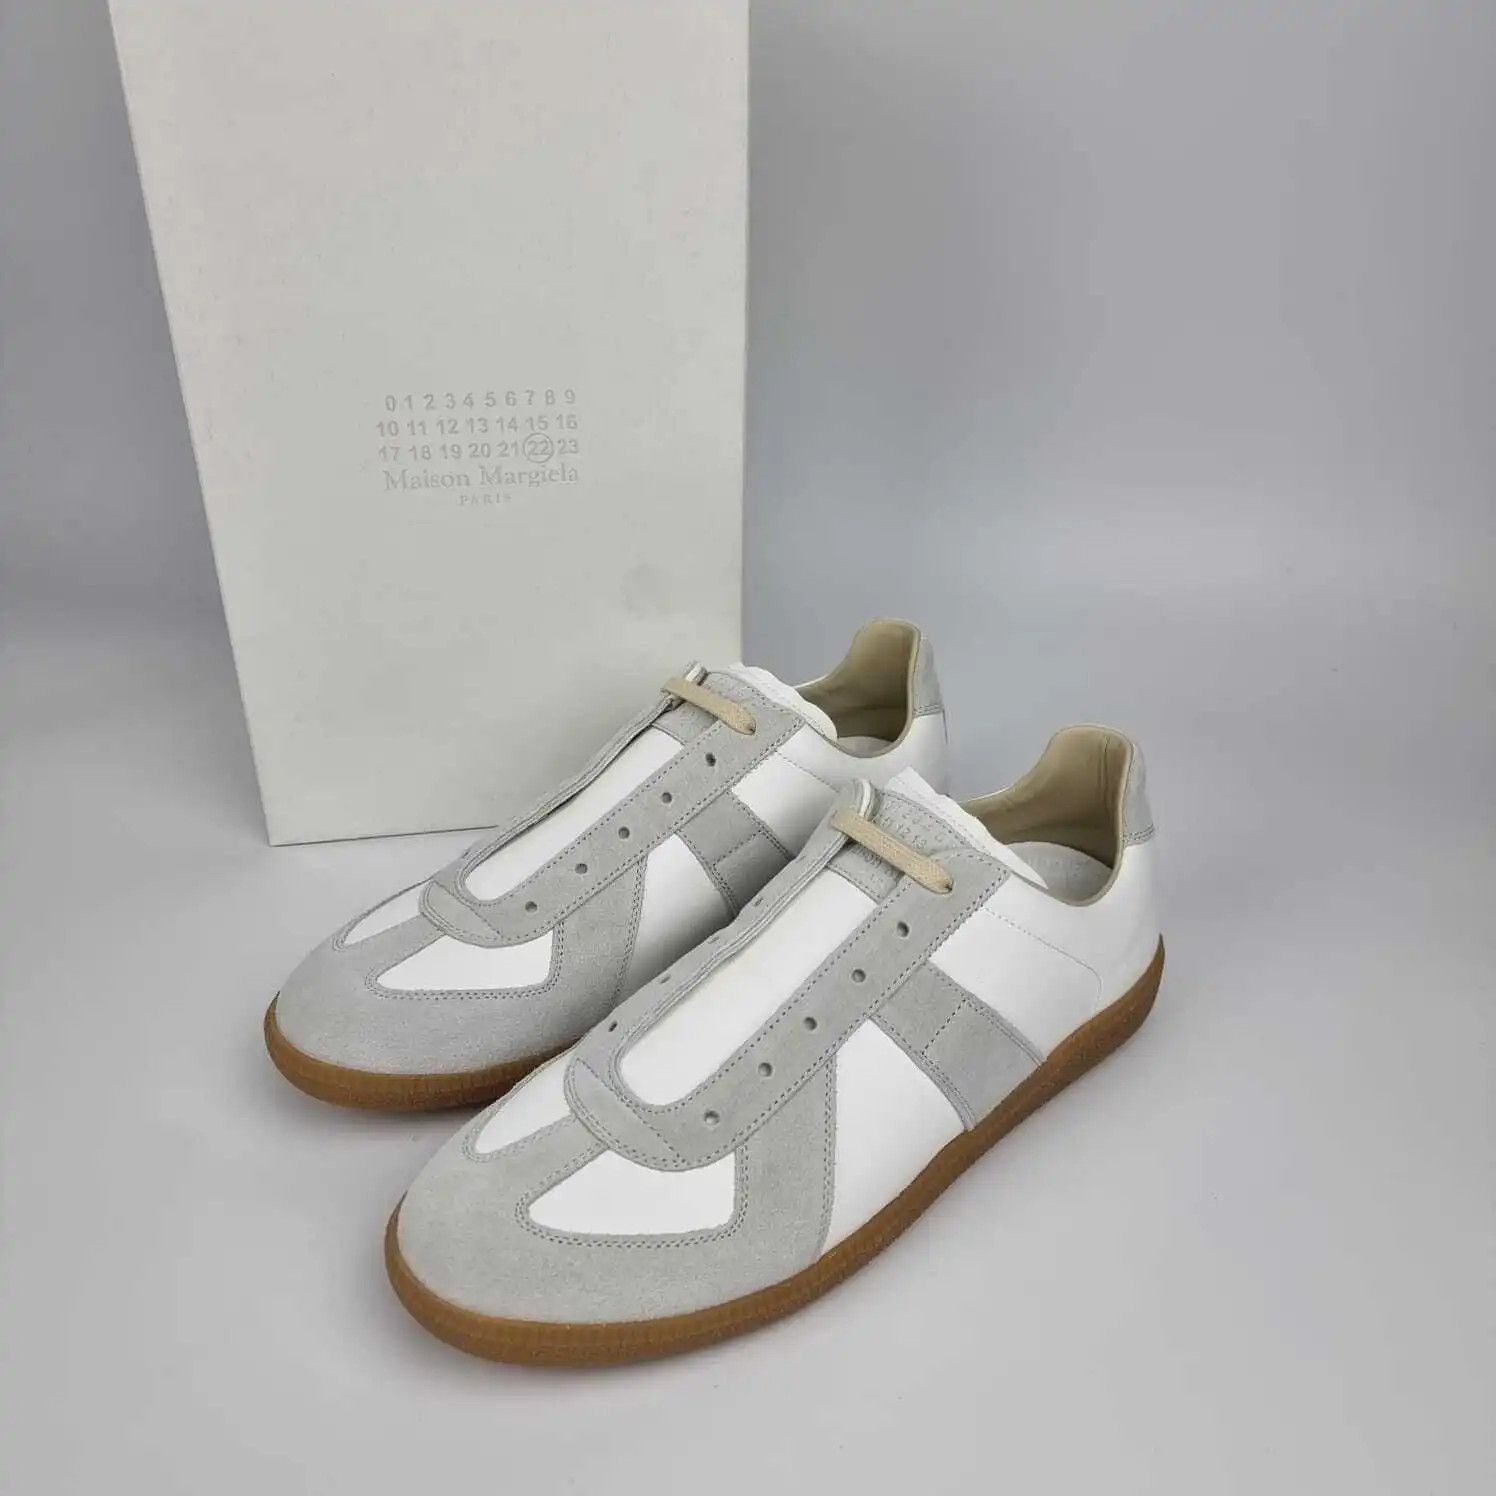 Maison Margiela Maison Margiela Beige/White Sneakers New | Grailed